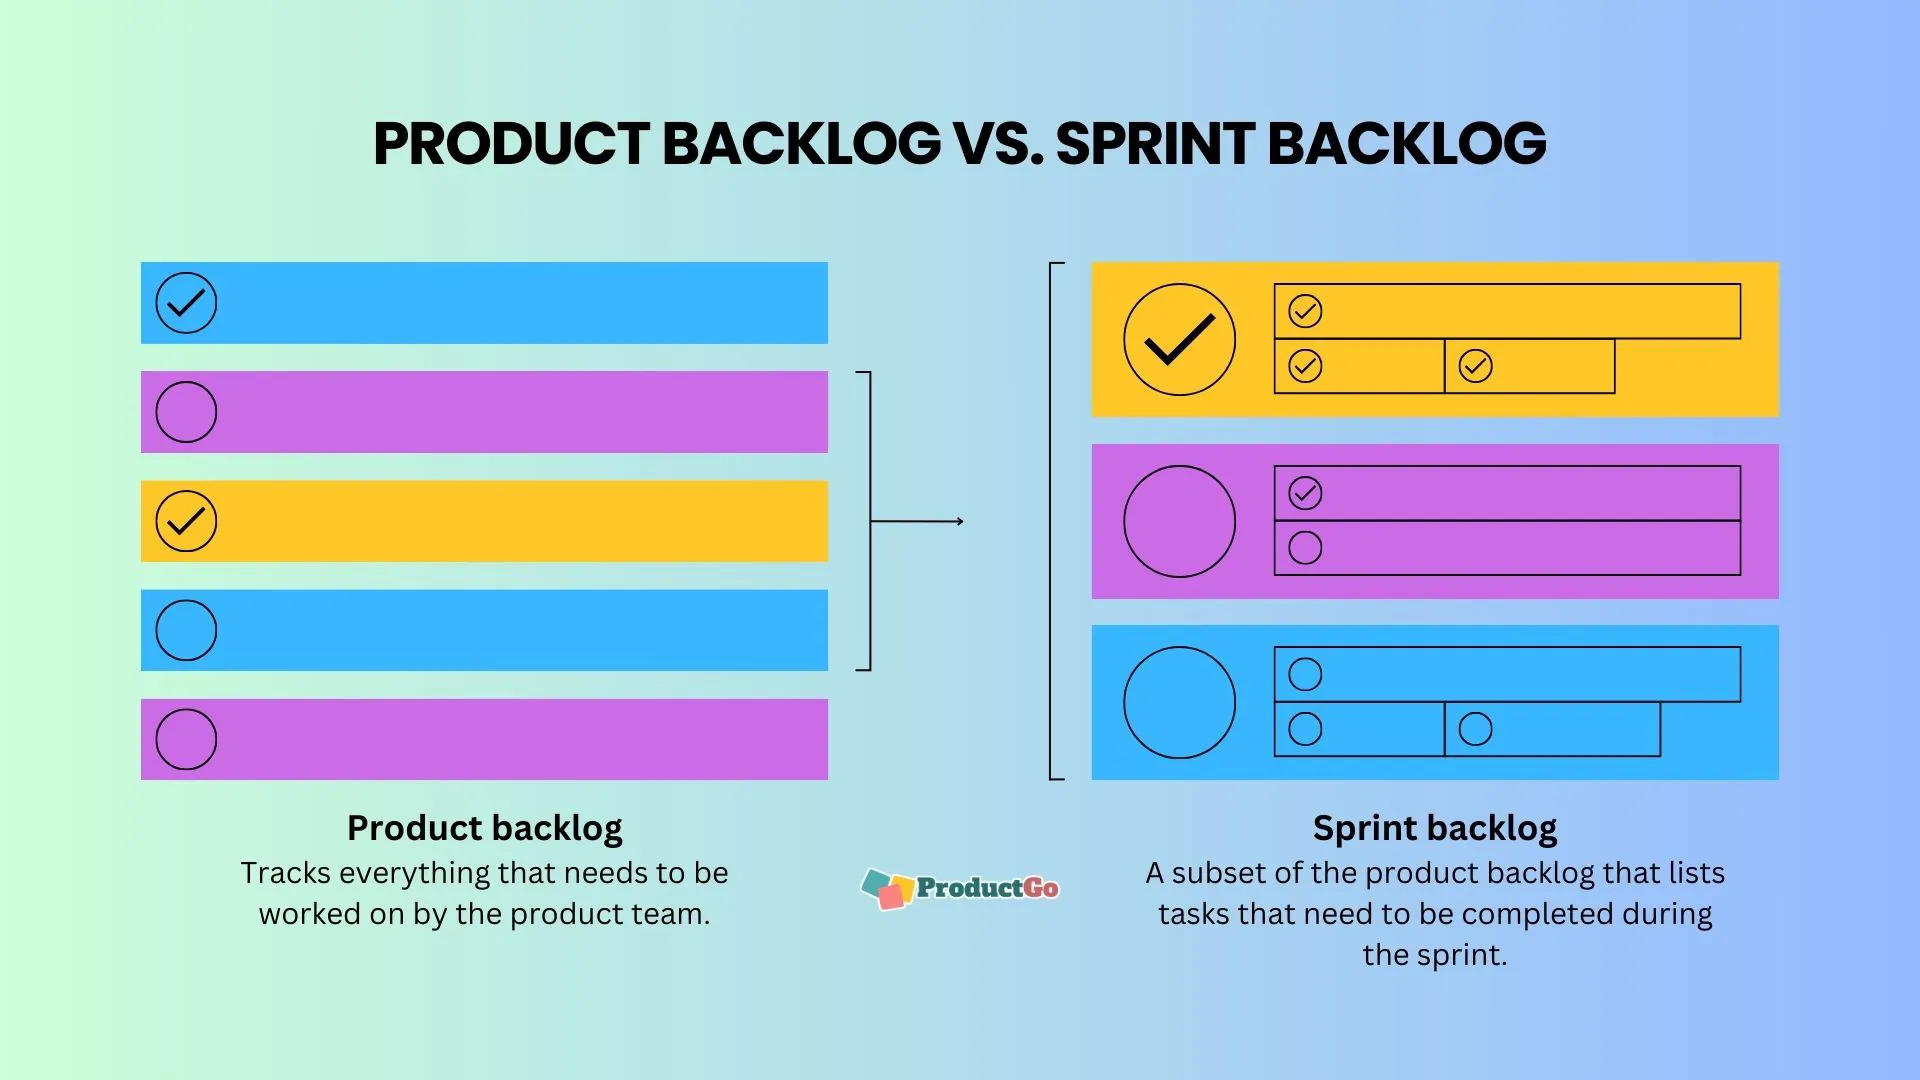 Product backlog vs. sprint backlog